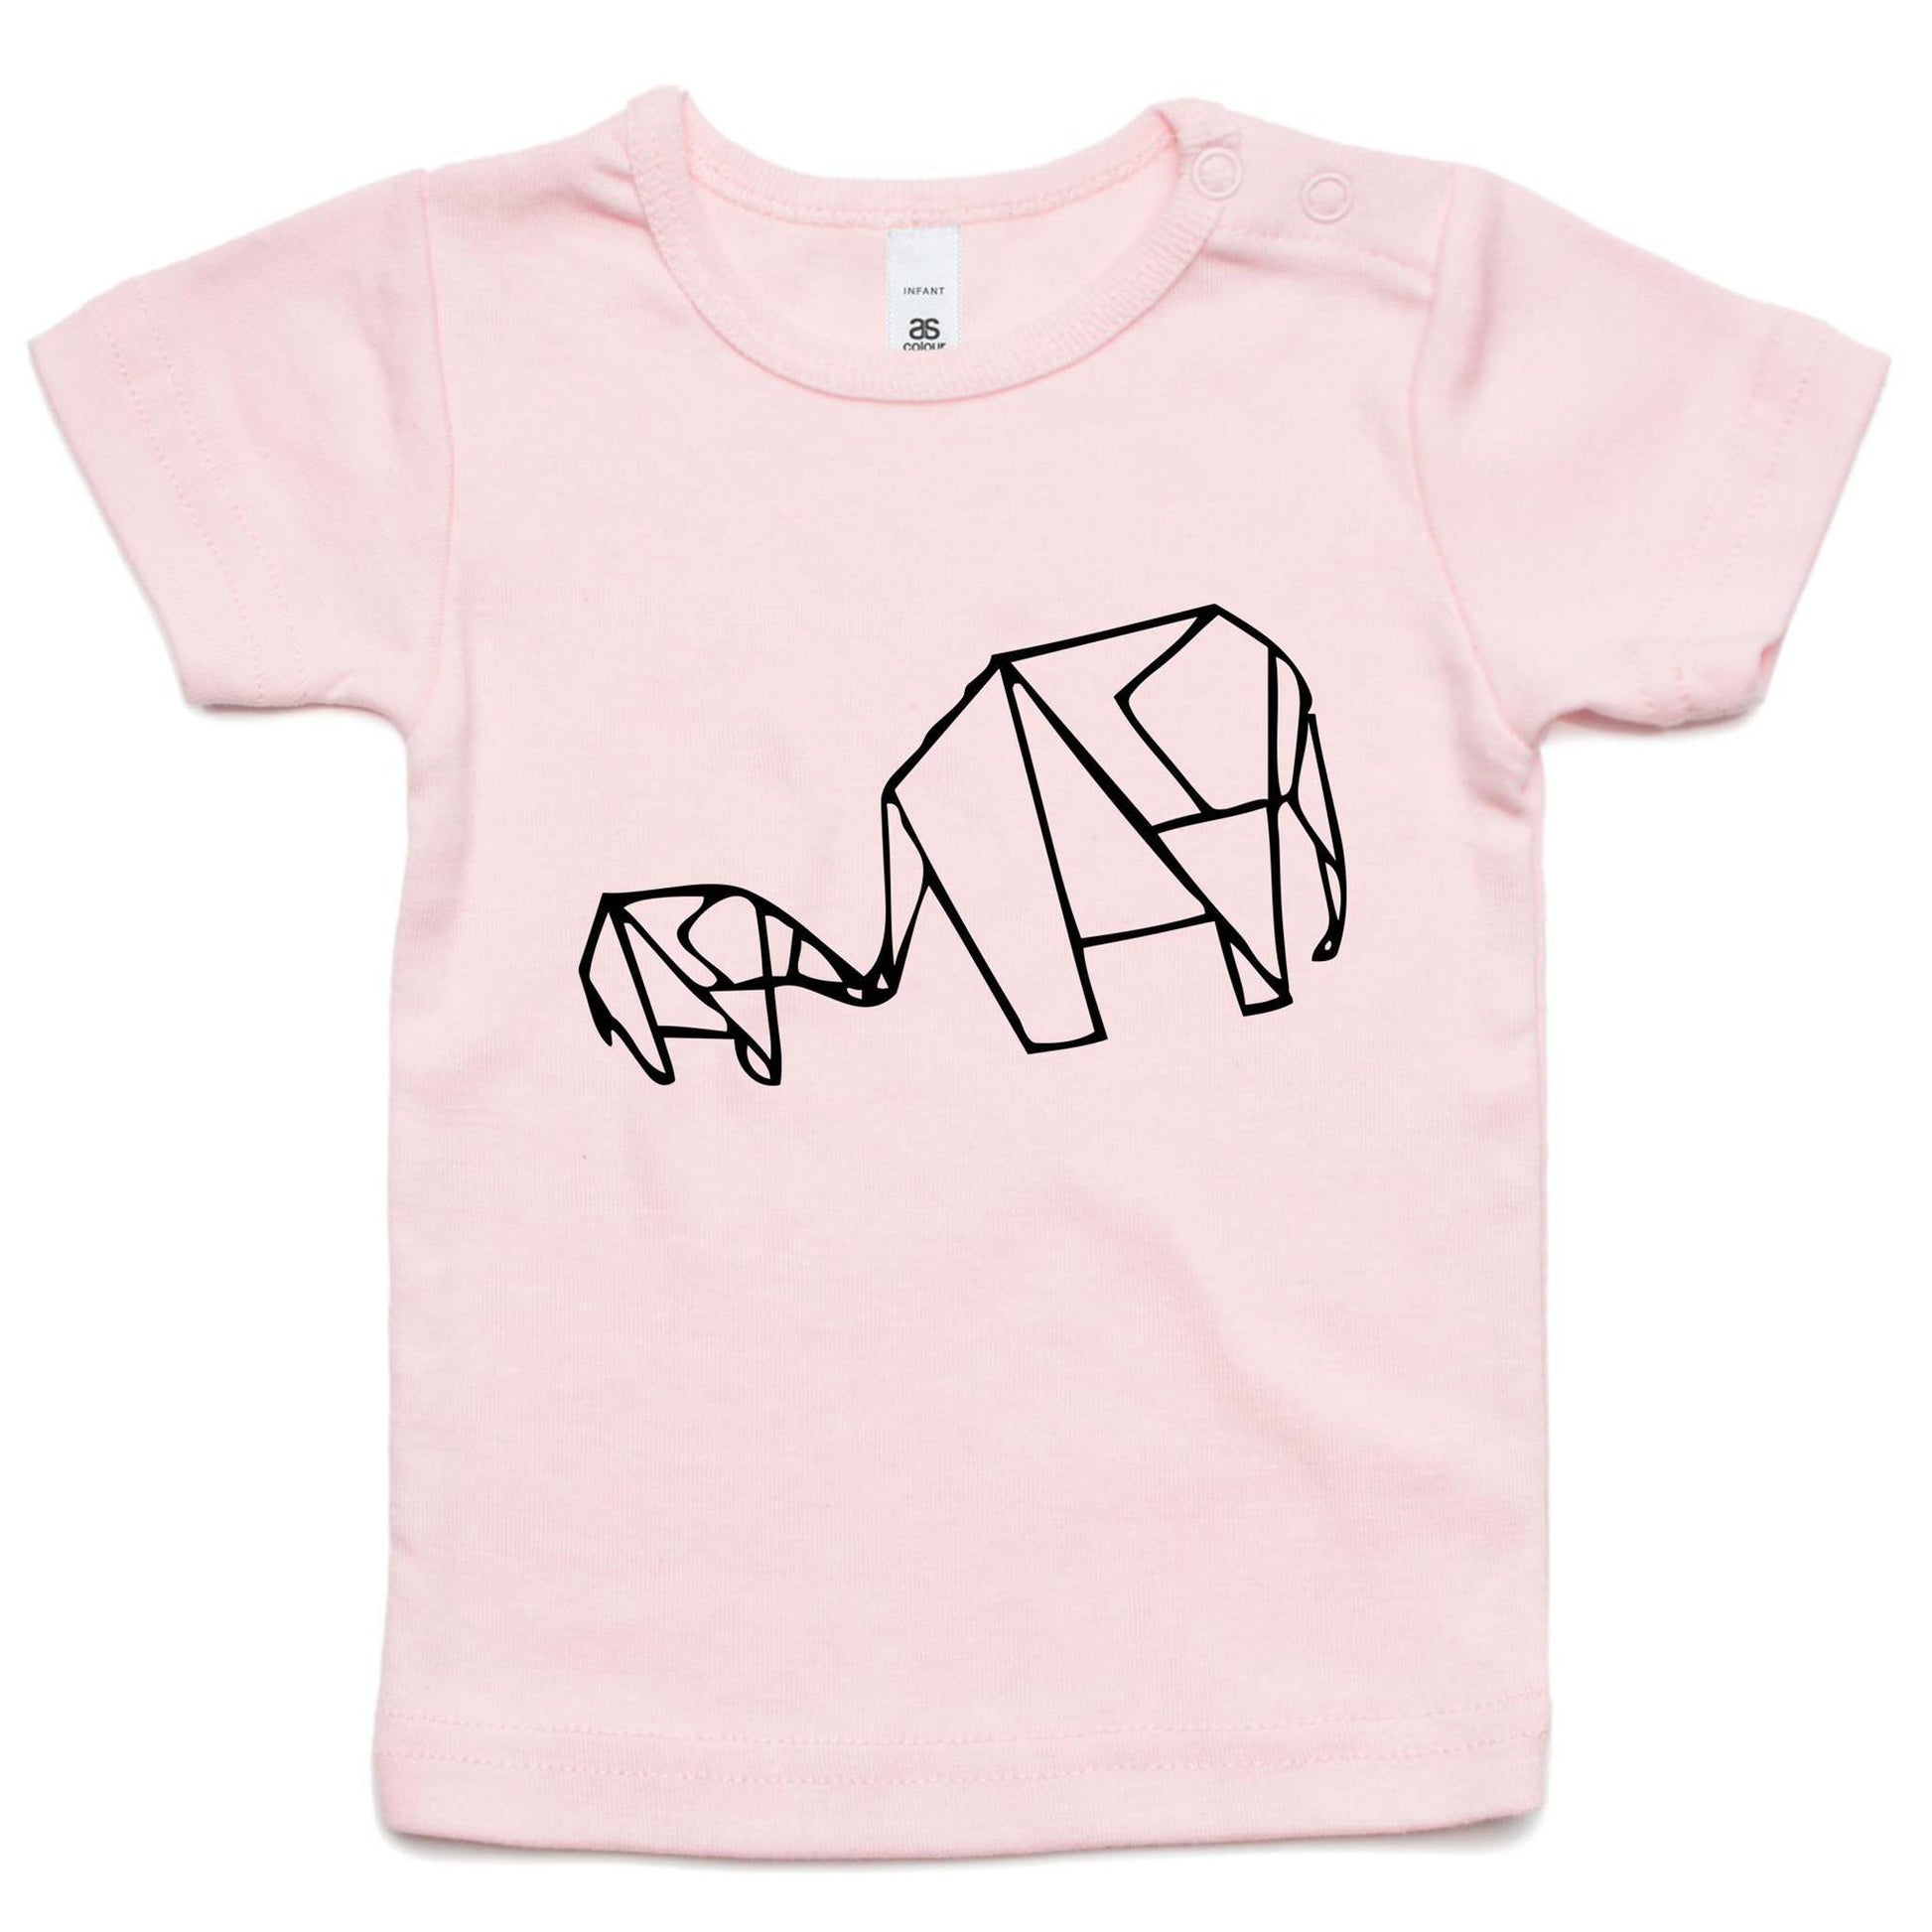 Origami Elephants - Baby T-shirt Pink Baby T-shirt kids